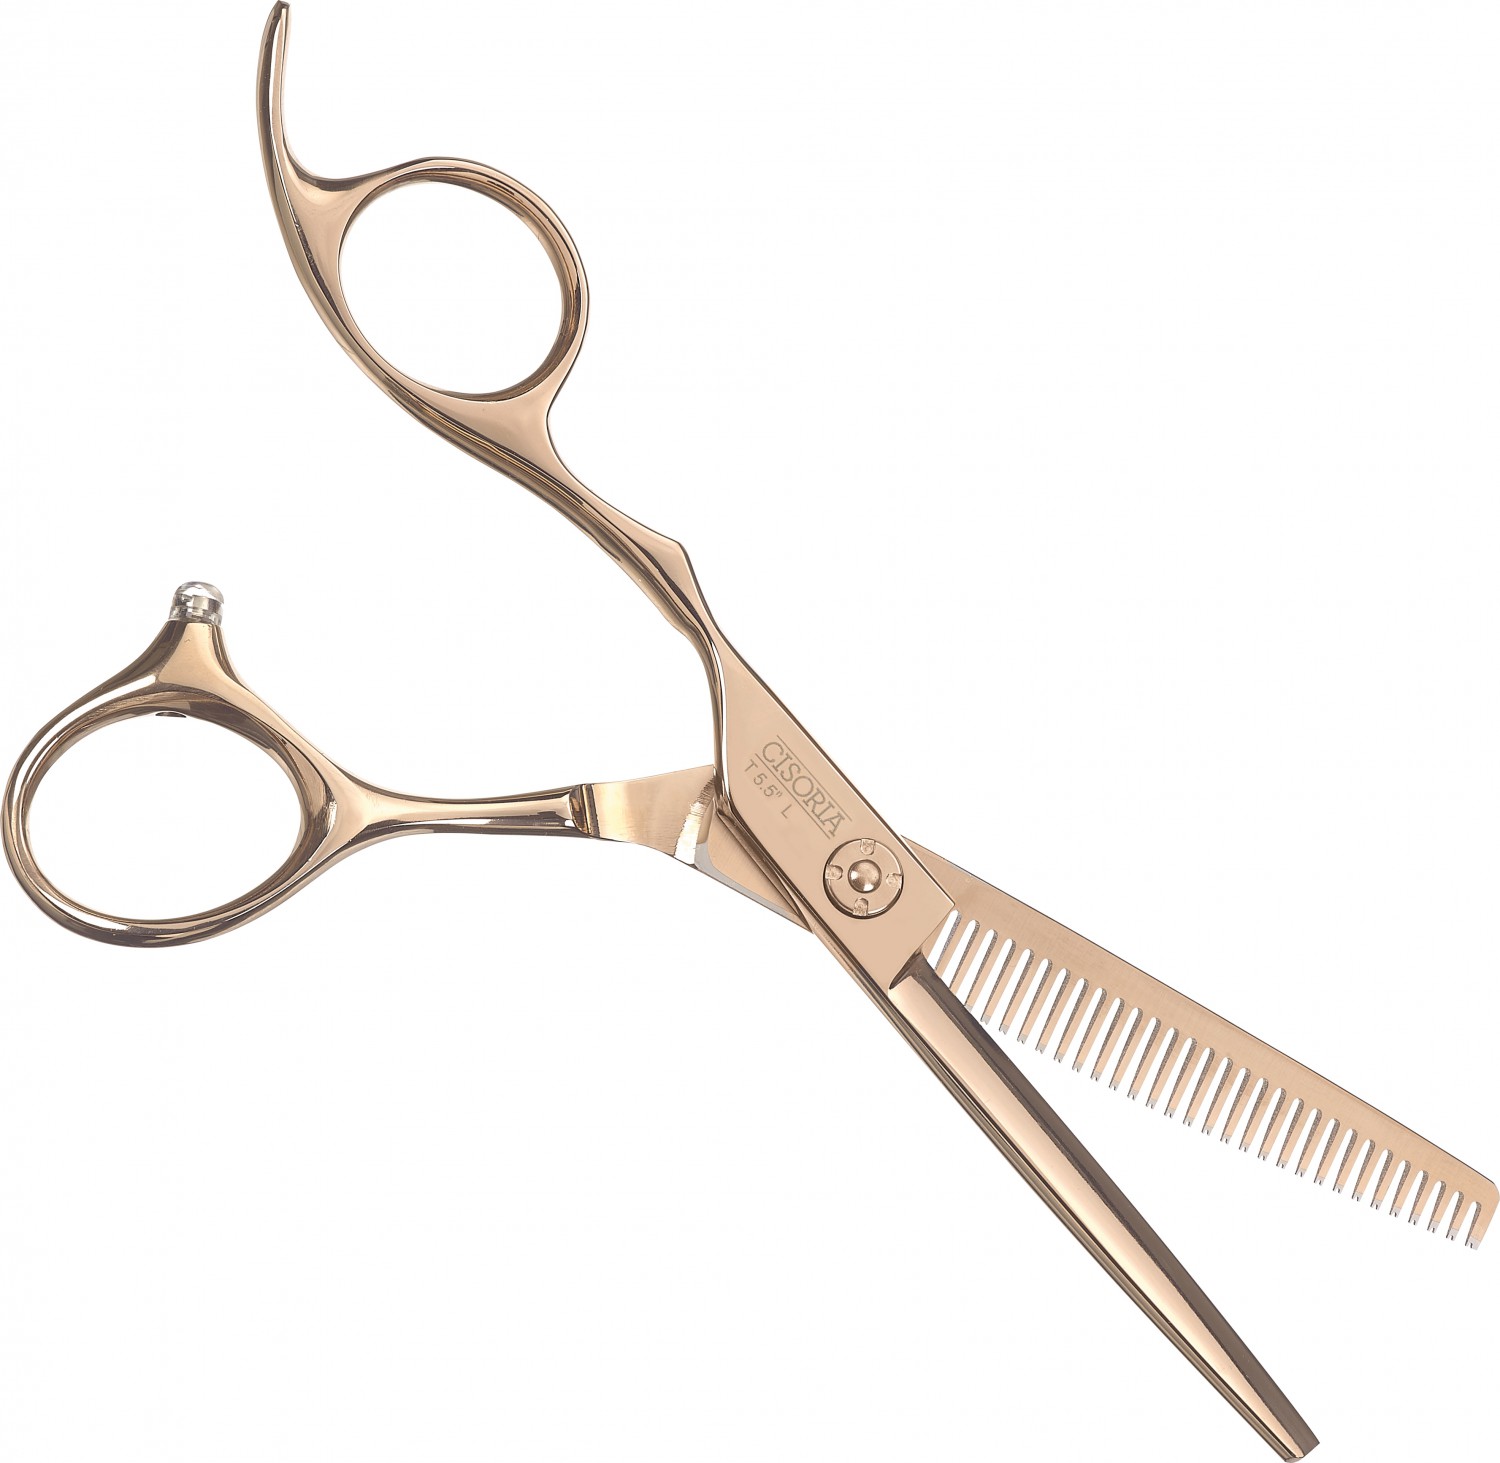  Cisoria Offset Thinning Scissors 6"L RGOET30 by Sibel 